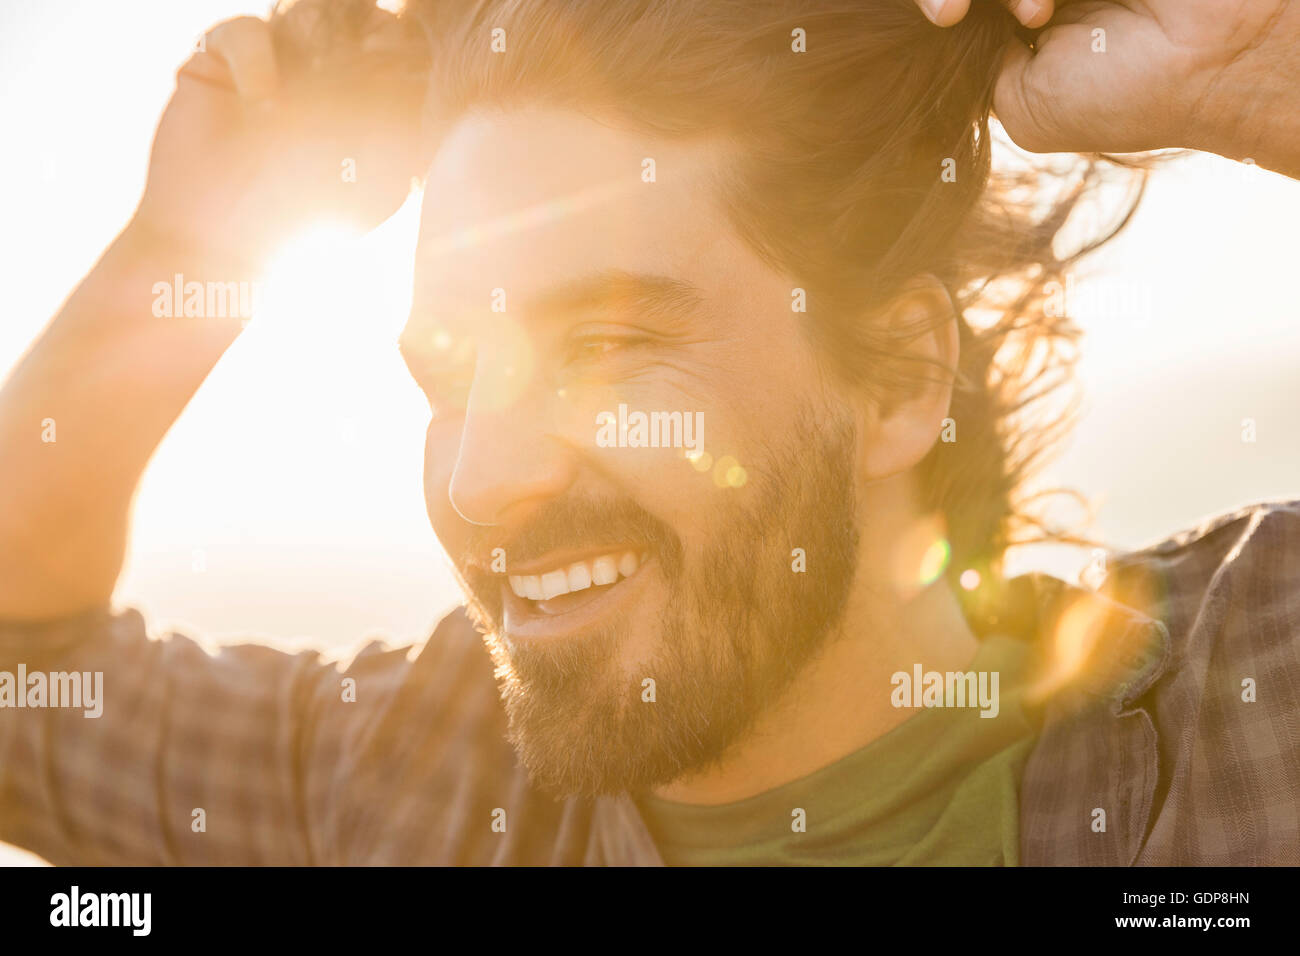 Man against glaring sun Stock Photo